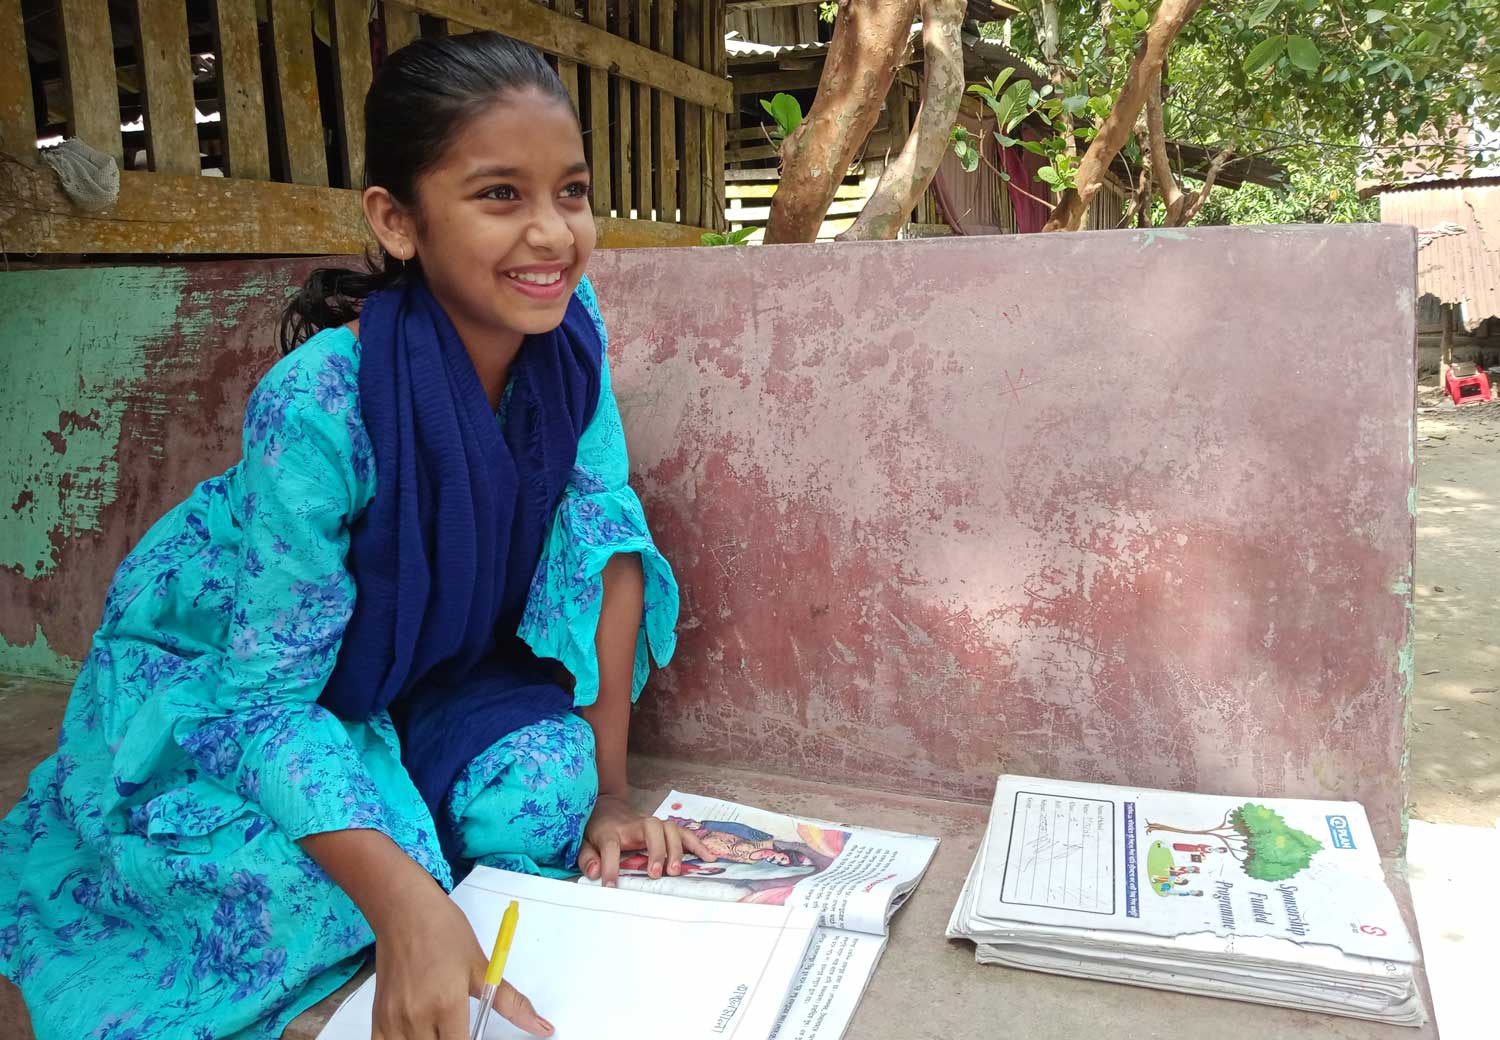 Jente på skole i Bangladesh.